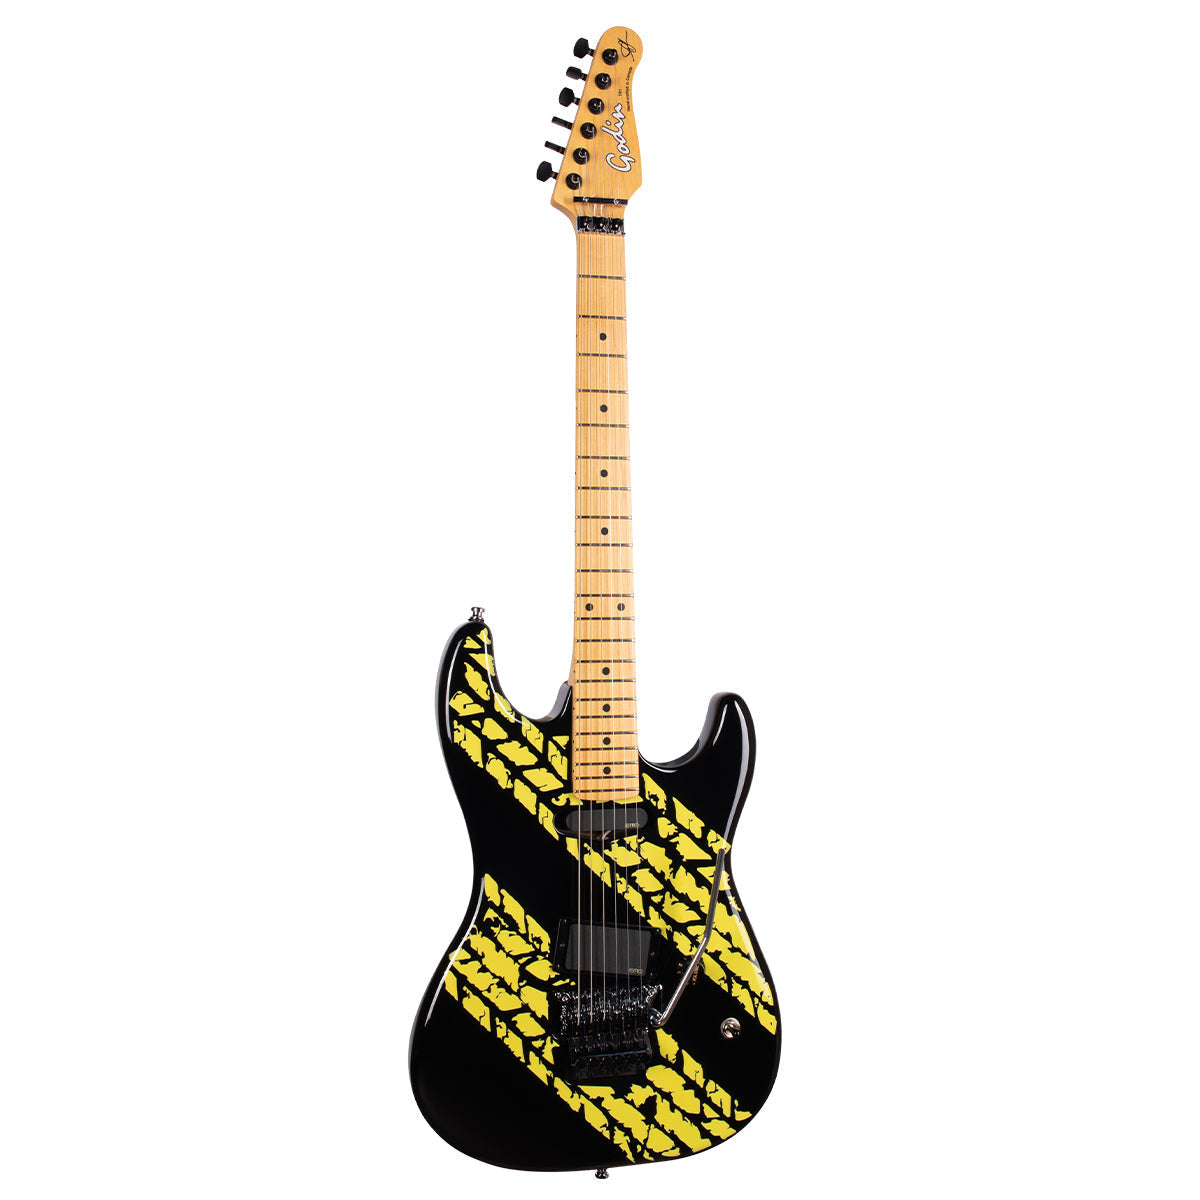 Godin Derry Grehan Signature Electric Guitar ~ Tread 1, Electric Guitar for sale at Richards Guitars.